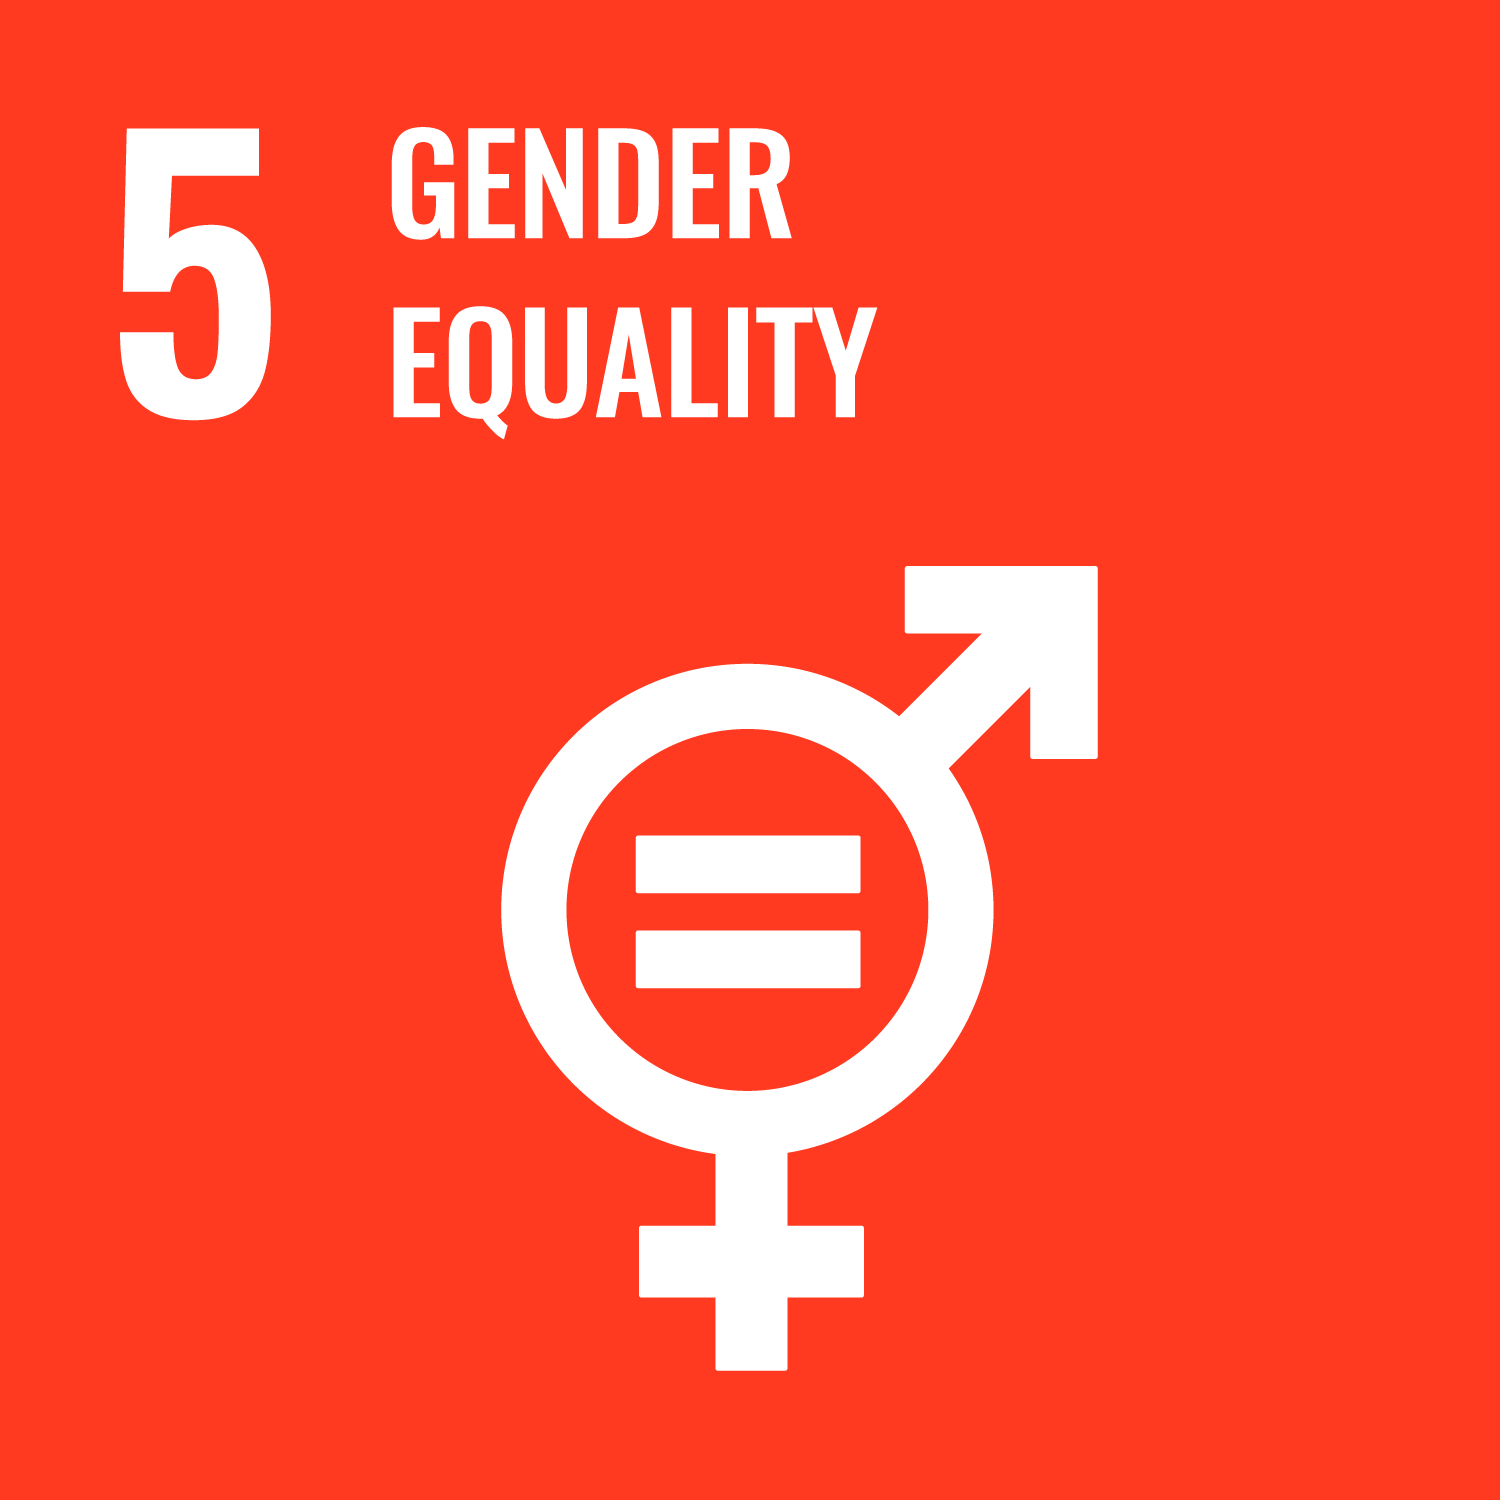 SDGs Goal 5 Gender Equality cover image